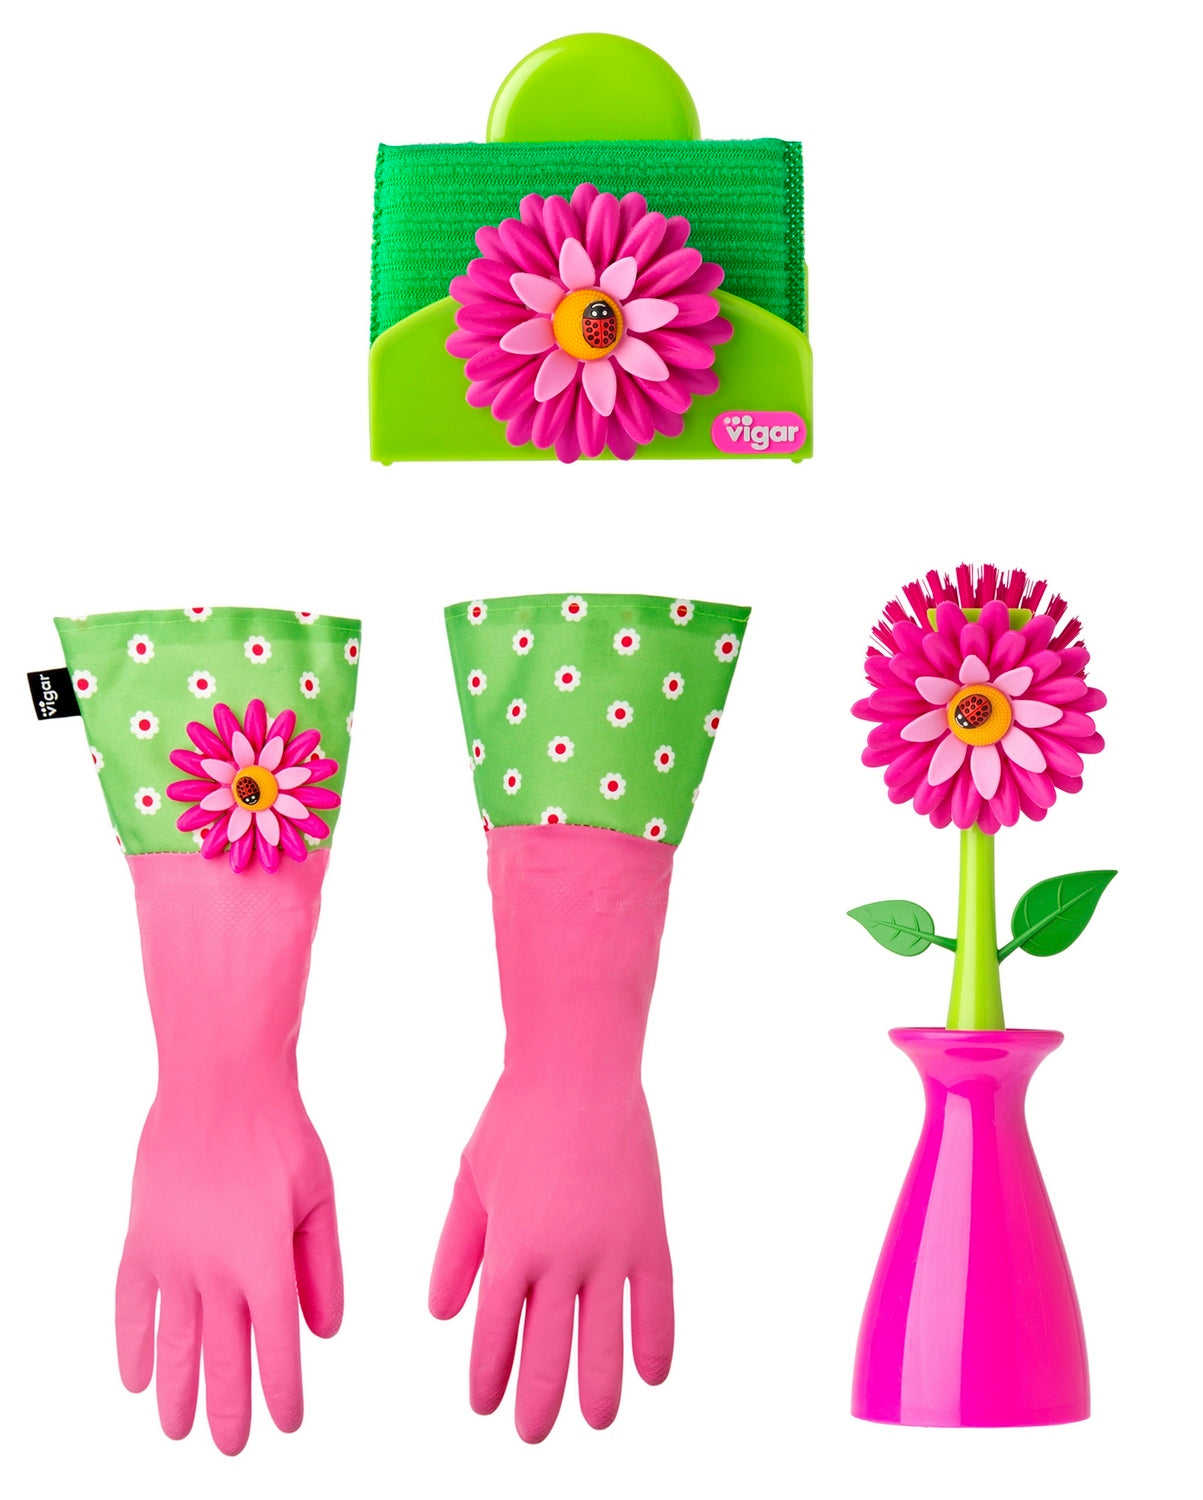 Vigar Flower Power Set (Gloves, Pink Dish Brush With Vase, Sponge Holder)